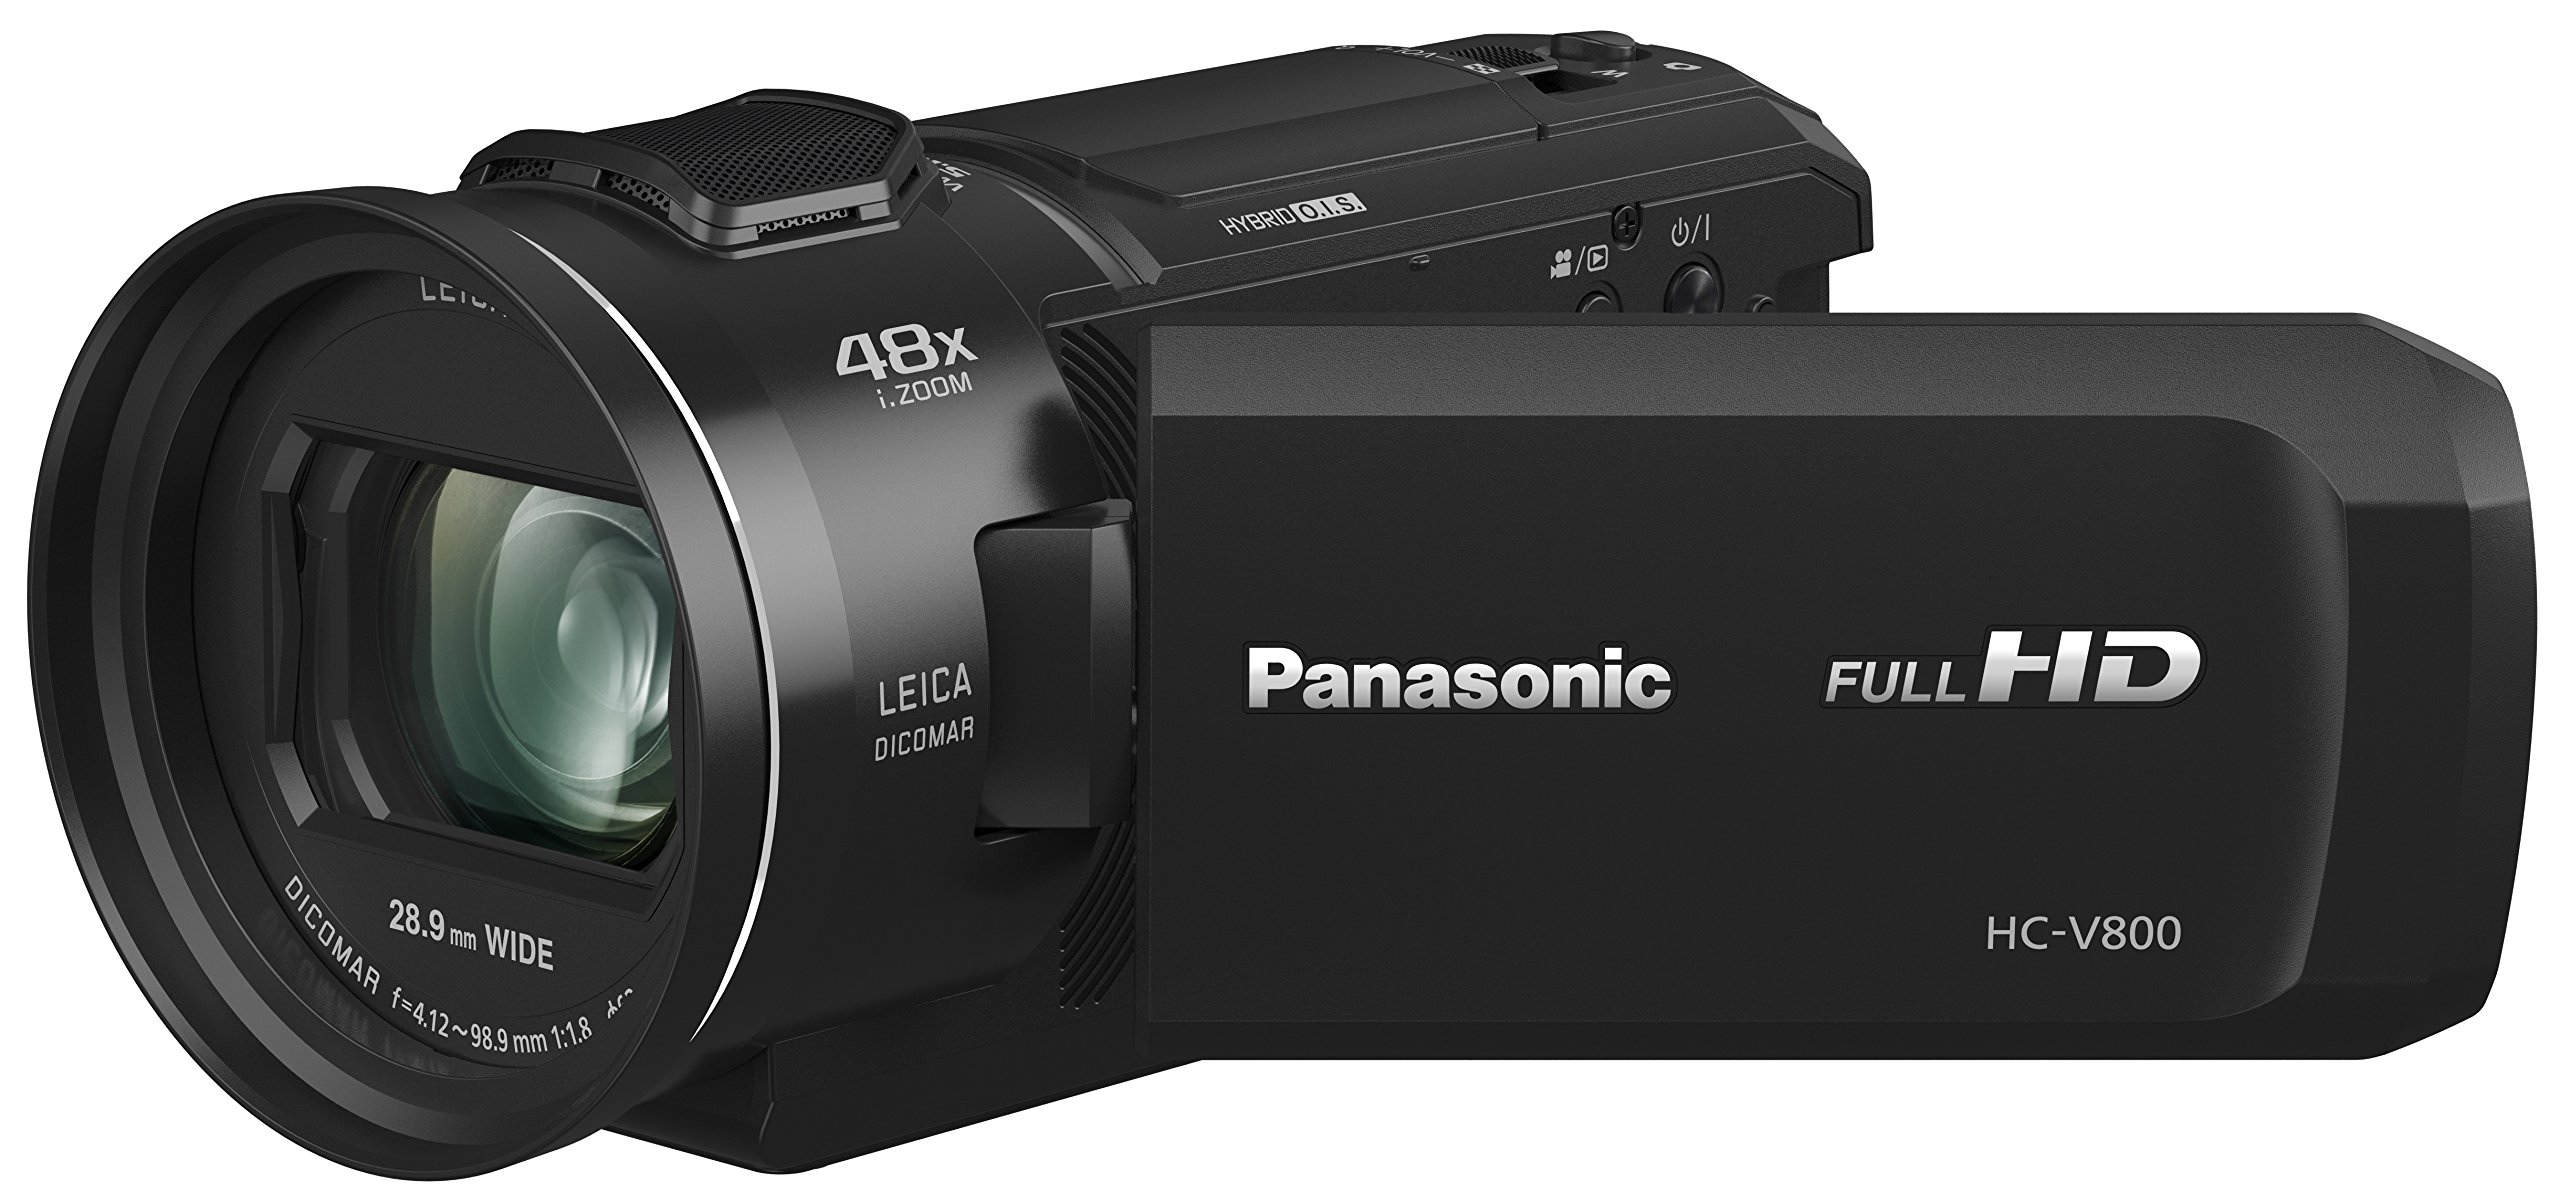 Panasonic HC-V800K FHD Cinema-like Camcorder, 24x Leica Dicomar Lens, 1/2.5" Bsi Sensor, Three O.I.S. Stabilizer Systems,Black